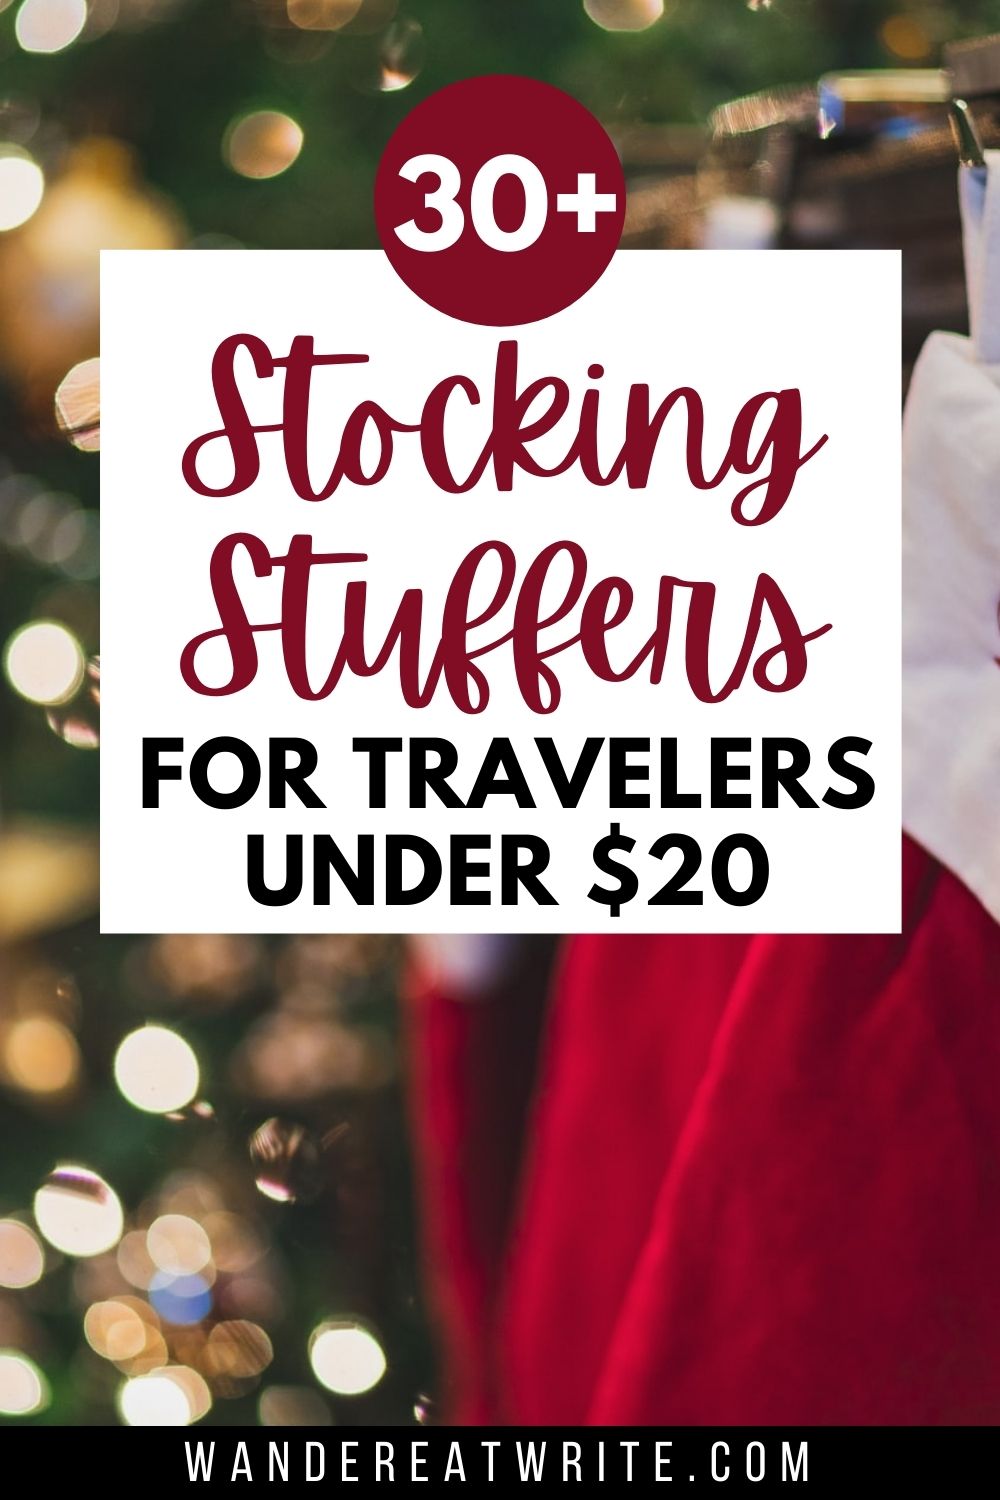 https://wandereatwrite.com/usheeche/2020/12/useful-stocking-stuffers-for-travelers-under-20-2.jpg